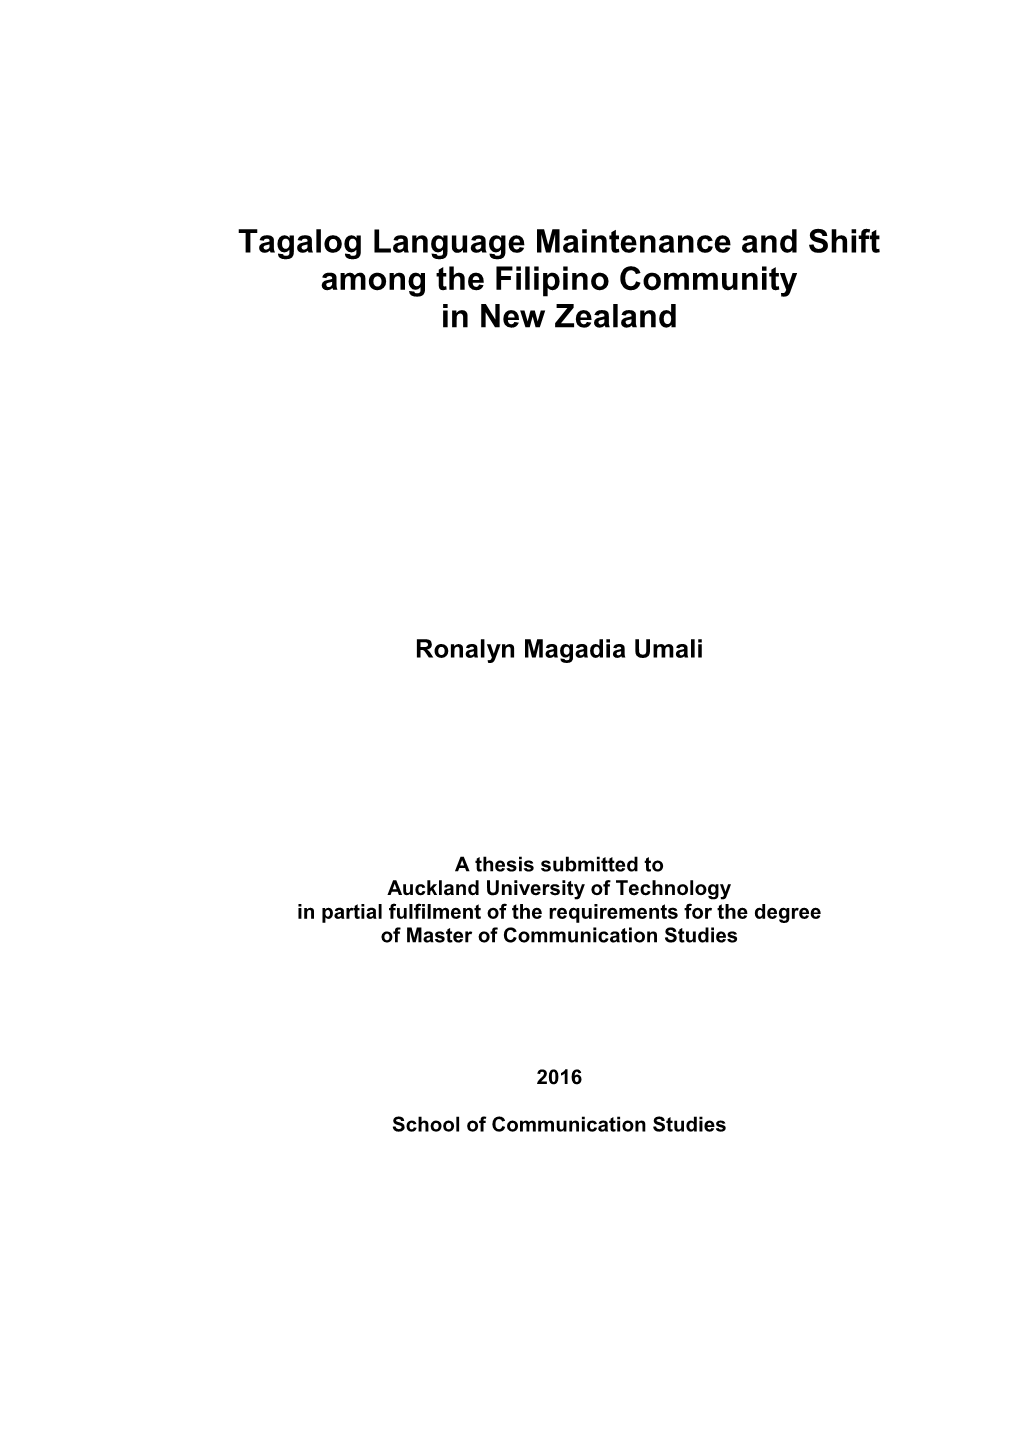 Tagalog Language Maintenance and Shift Among the Filipino Community in New Zealand